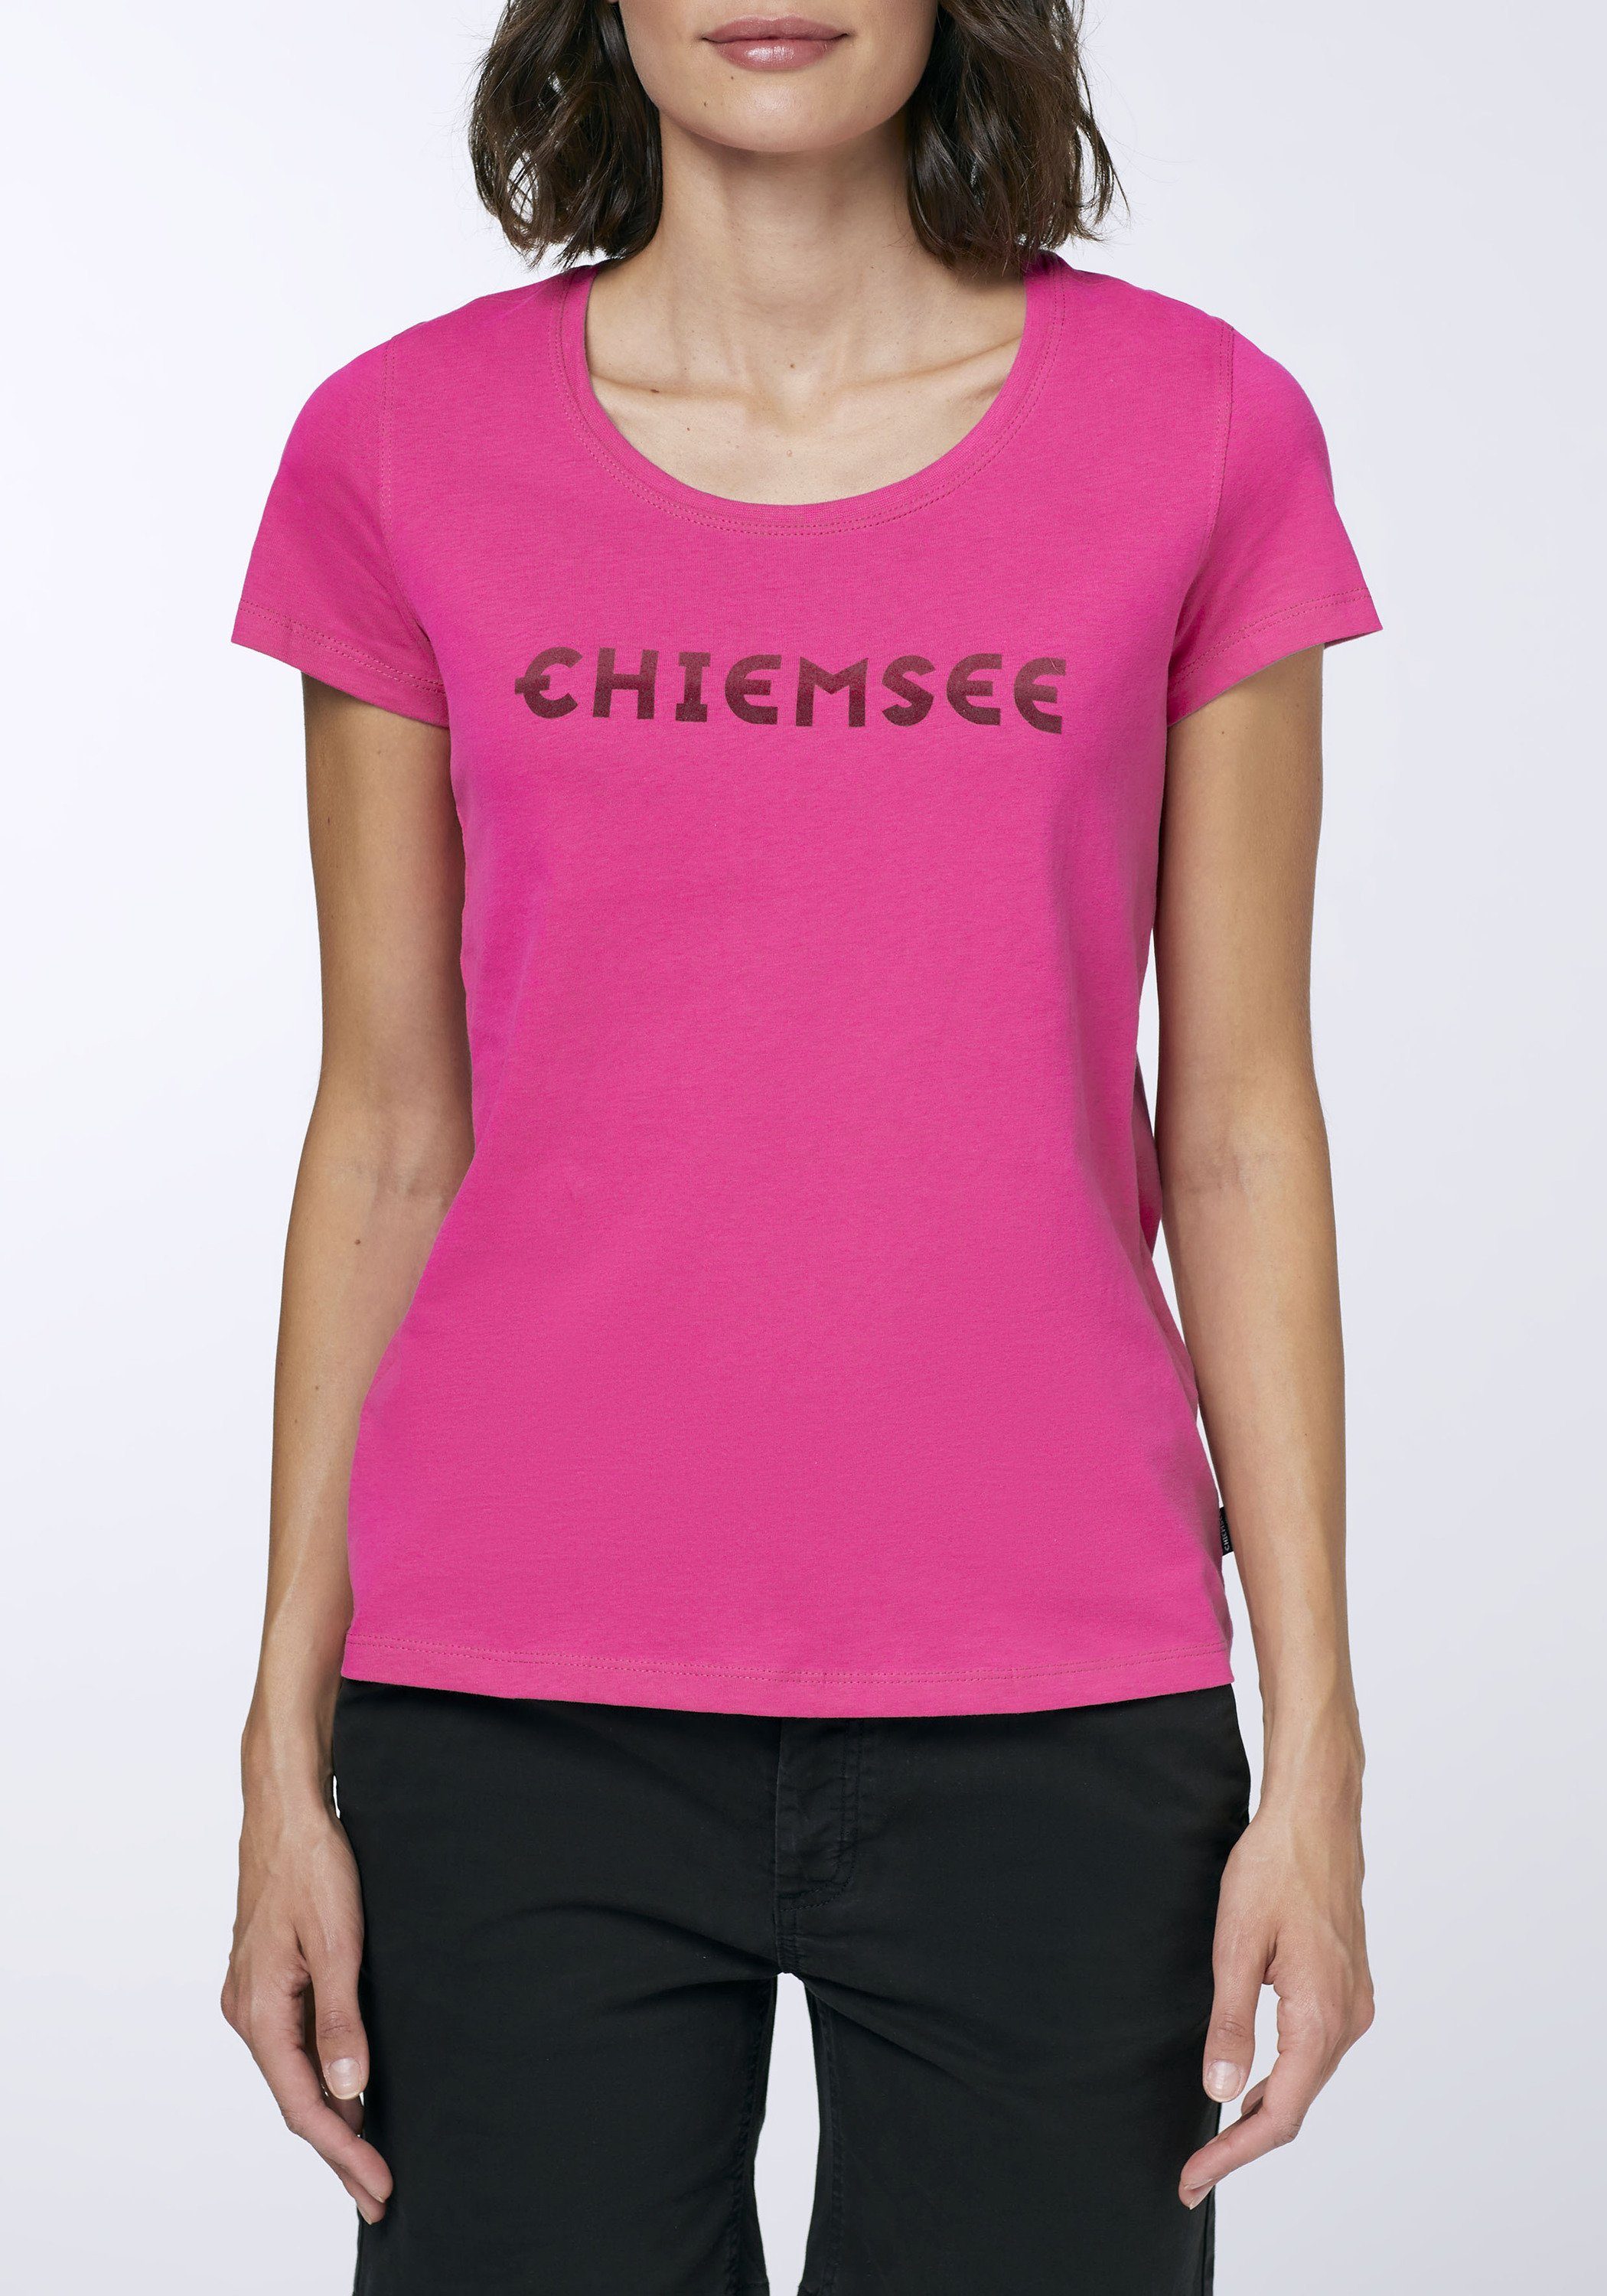 Chiemsee Print-Shirt T-Shirt mit Logo Farbverlauf-Optik Purple Beetroot 1 in